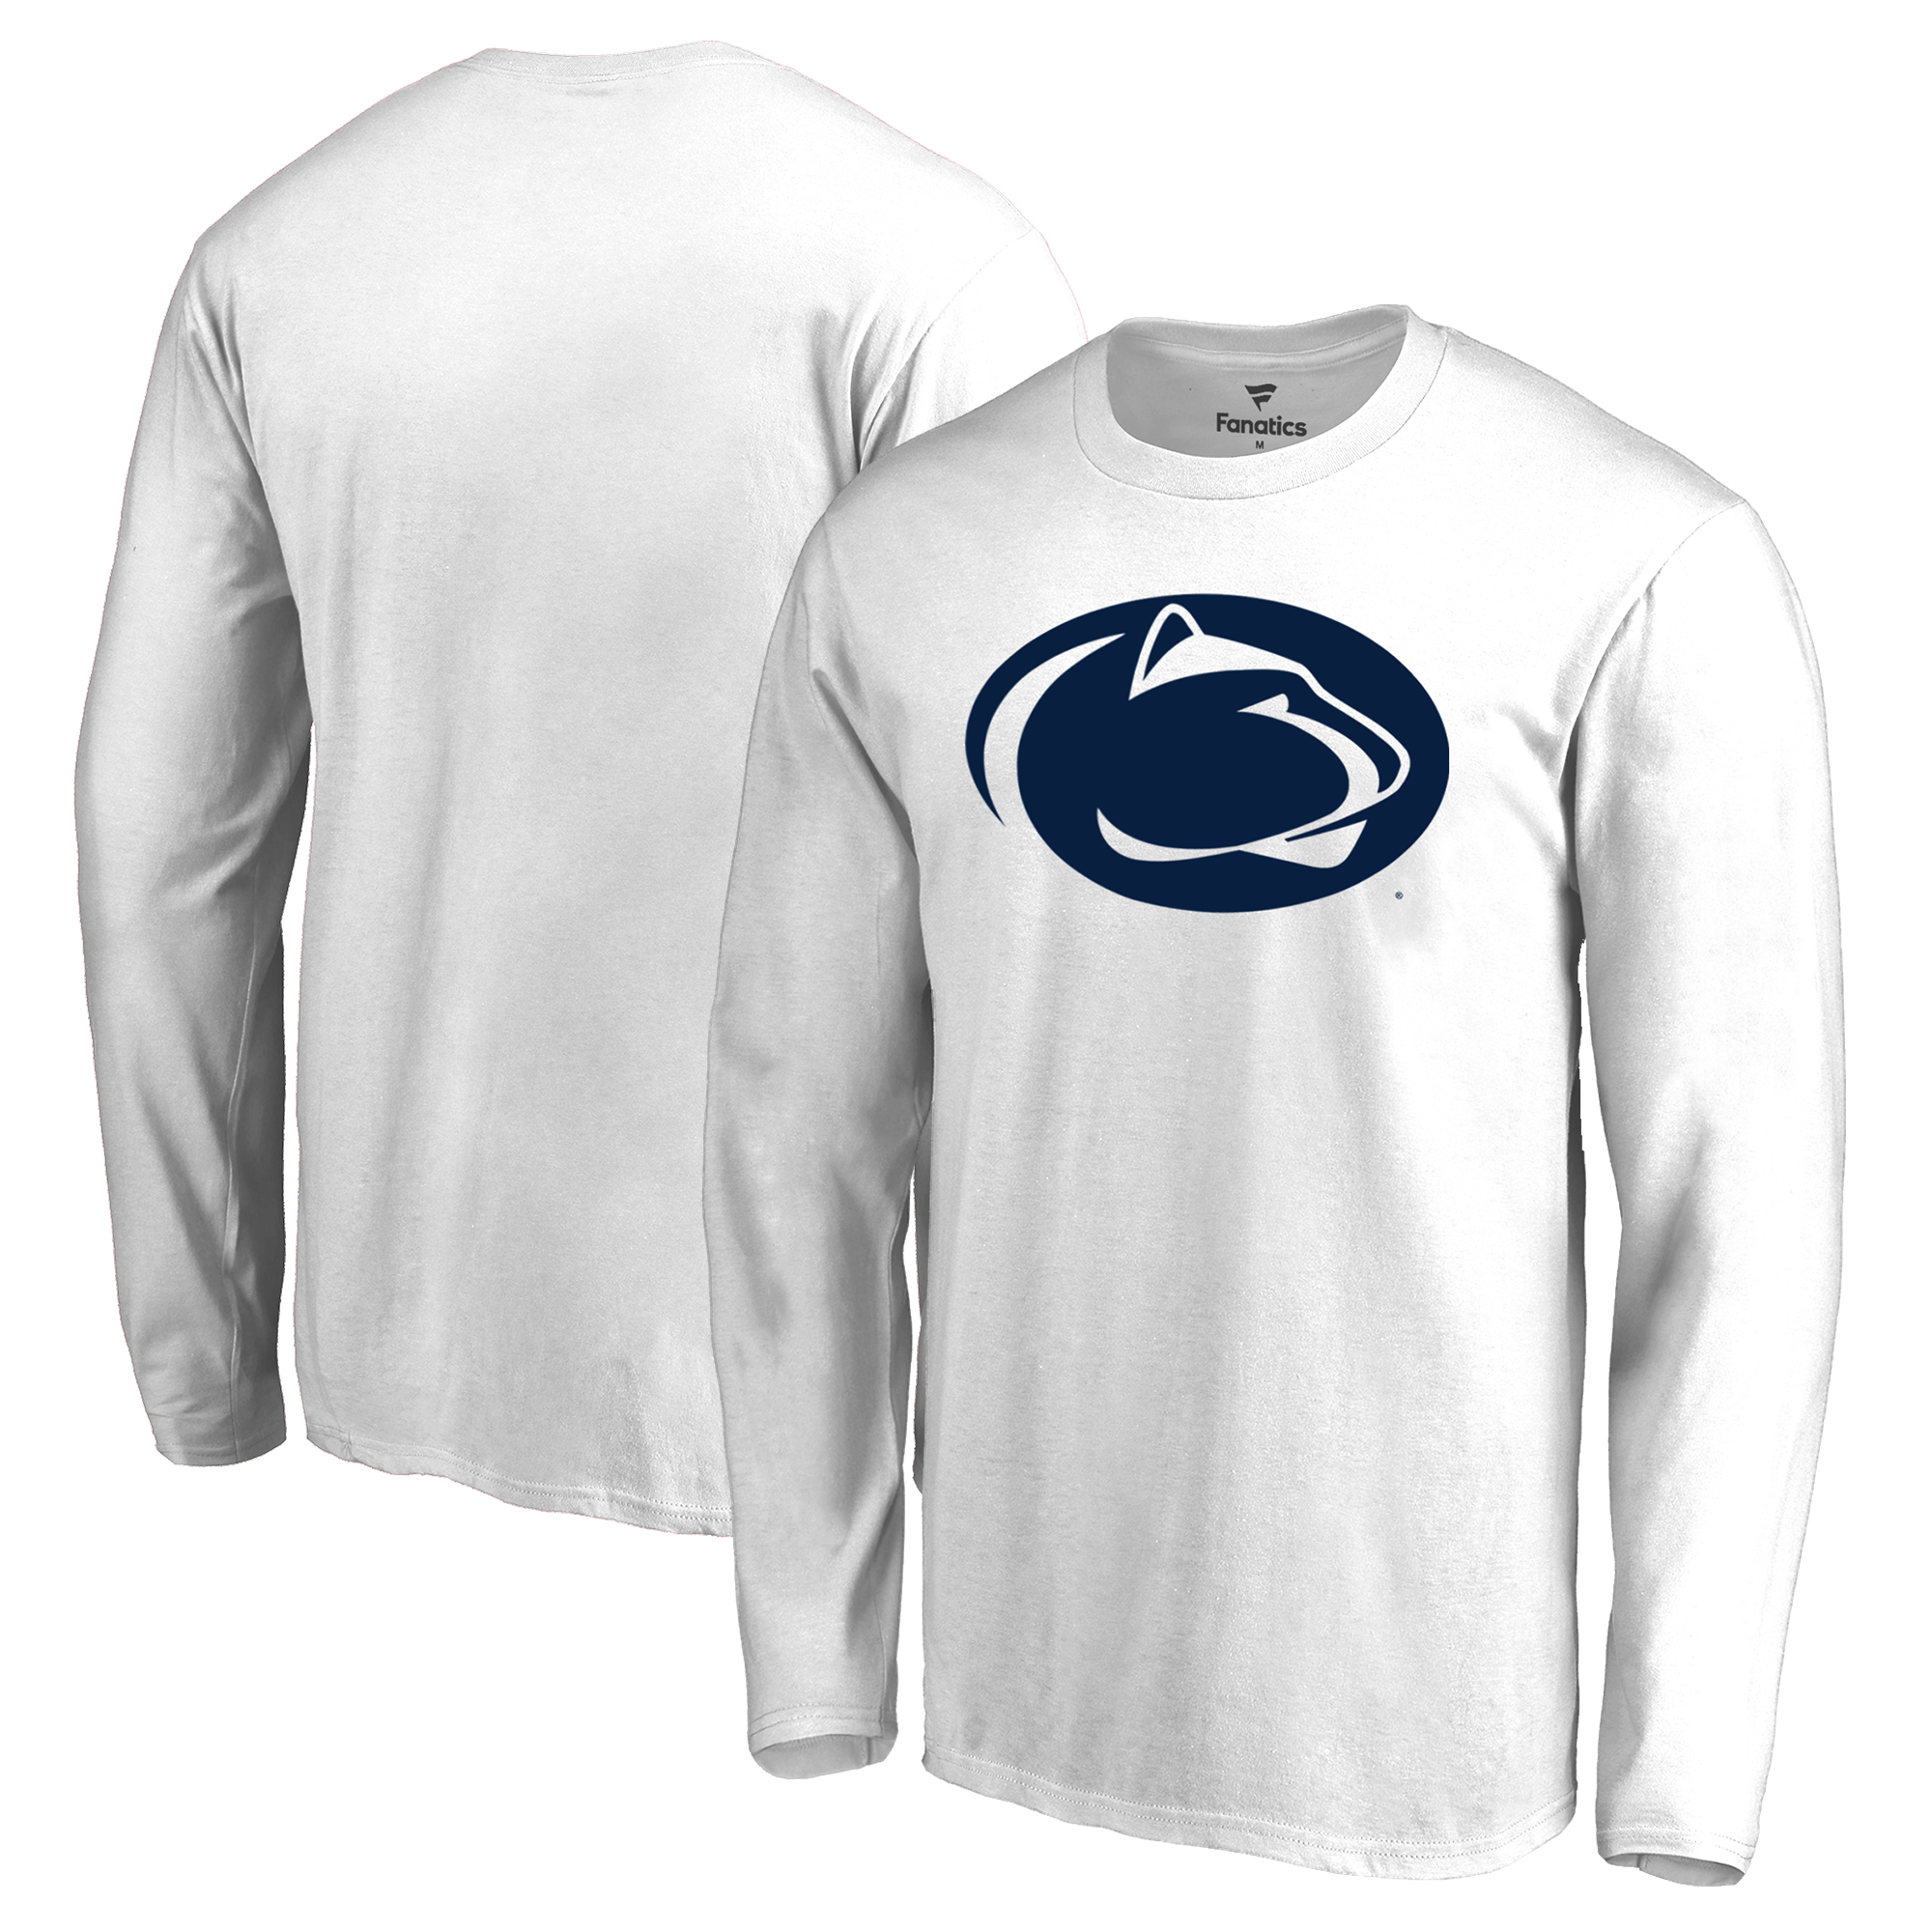 Men's Fanatics Branded White Penn State Nittany Lions Primary Logo Long Sleeve T-Shirt - image 1 of 3